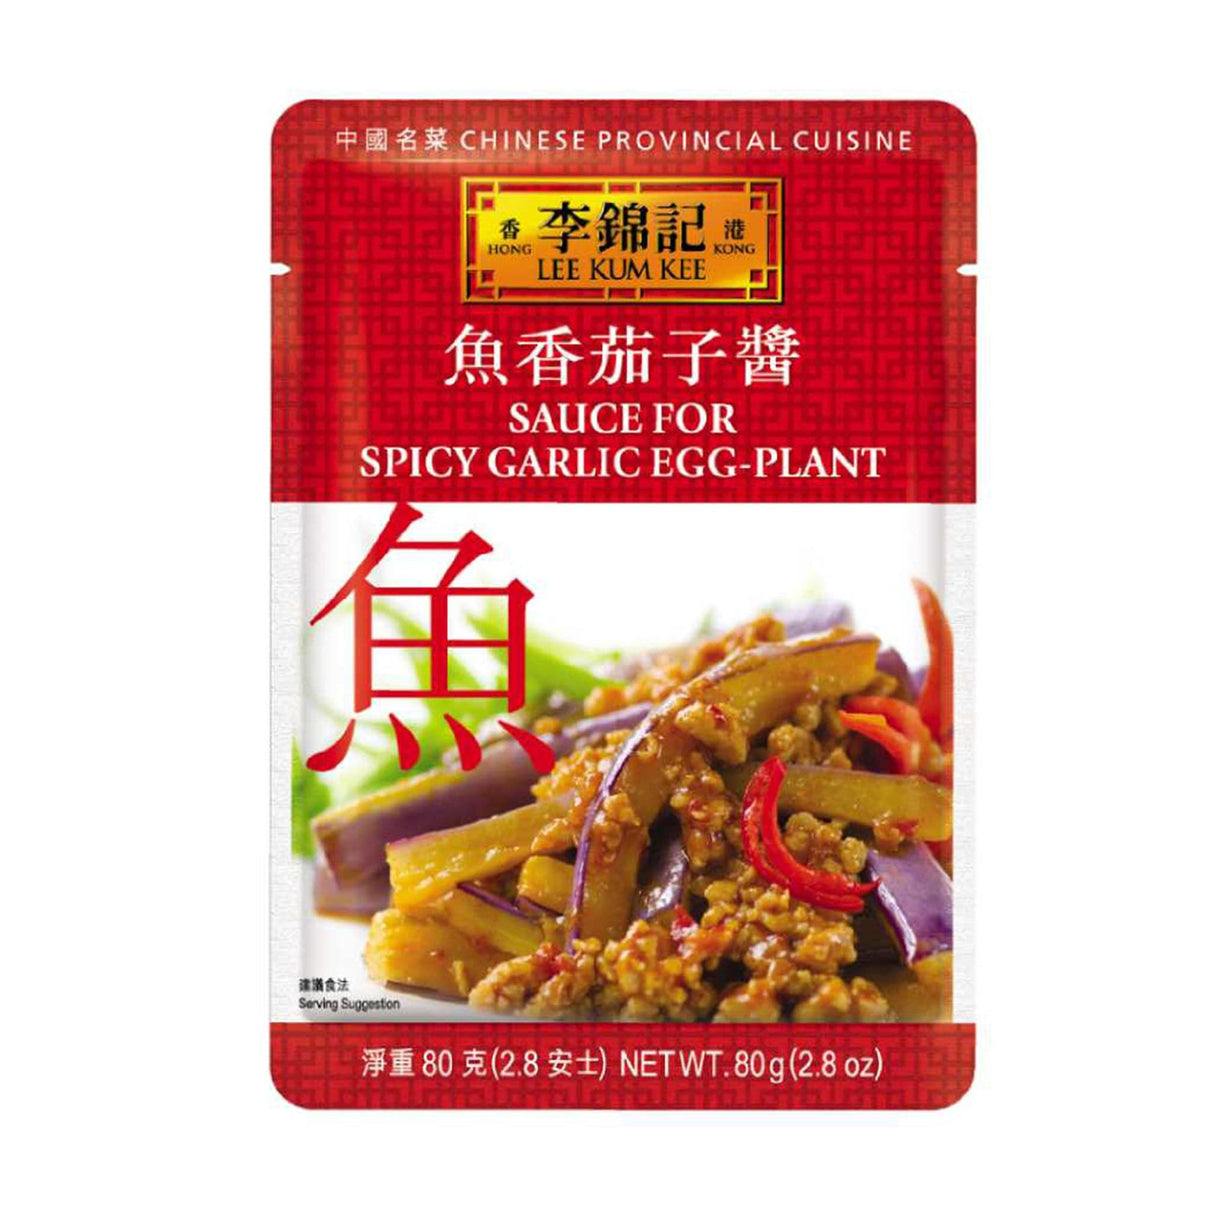 Lee Kum Kee Sauce For Spicy Garlic Eggplant